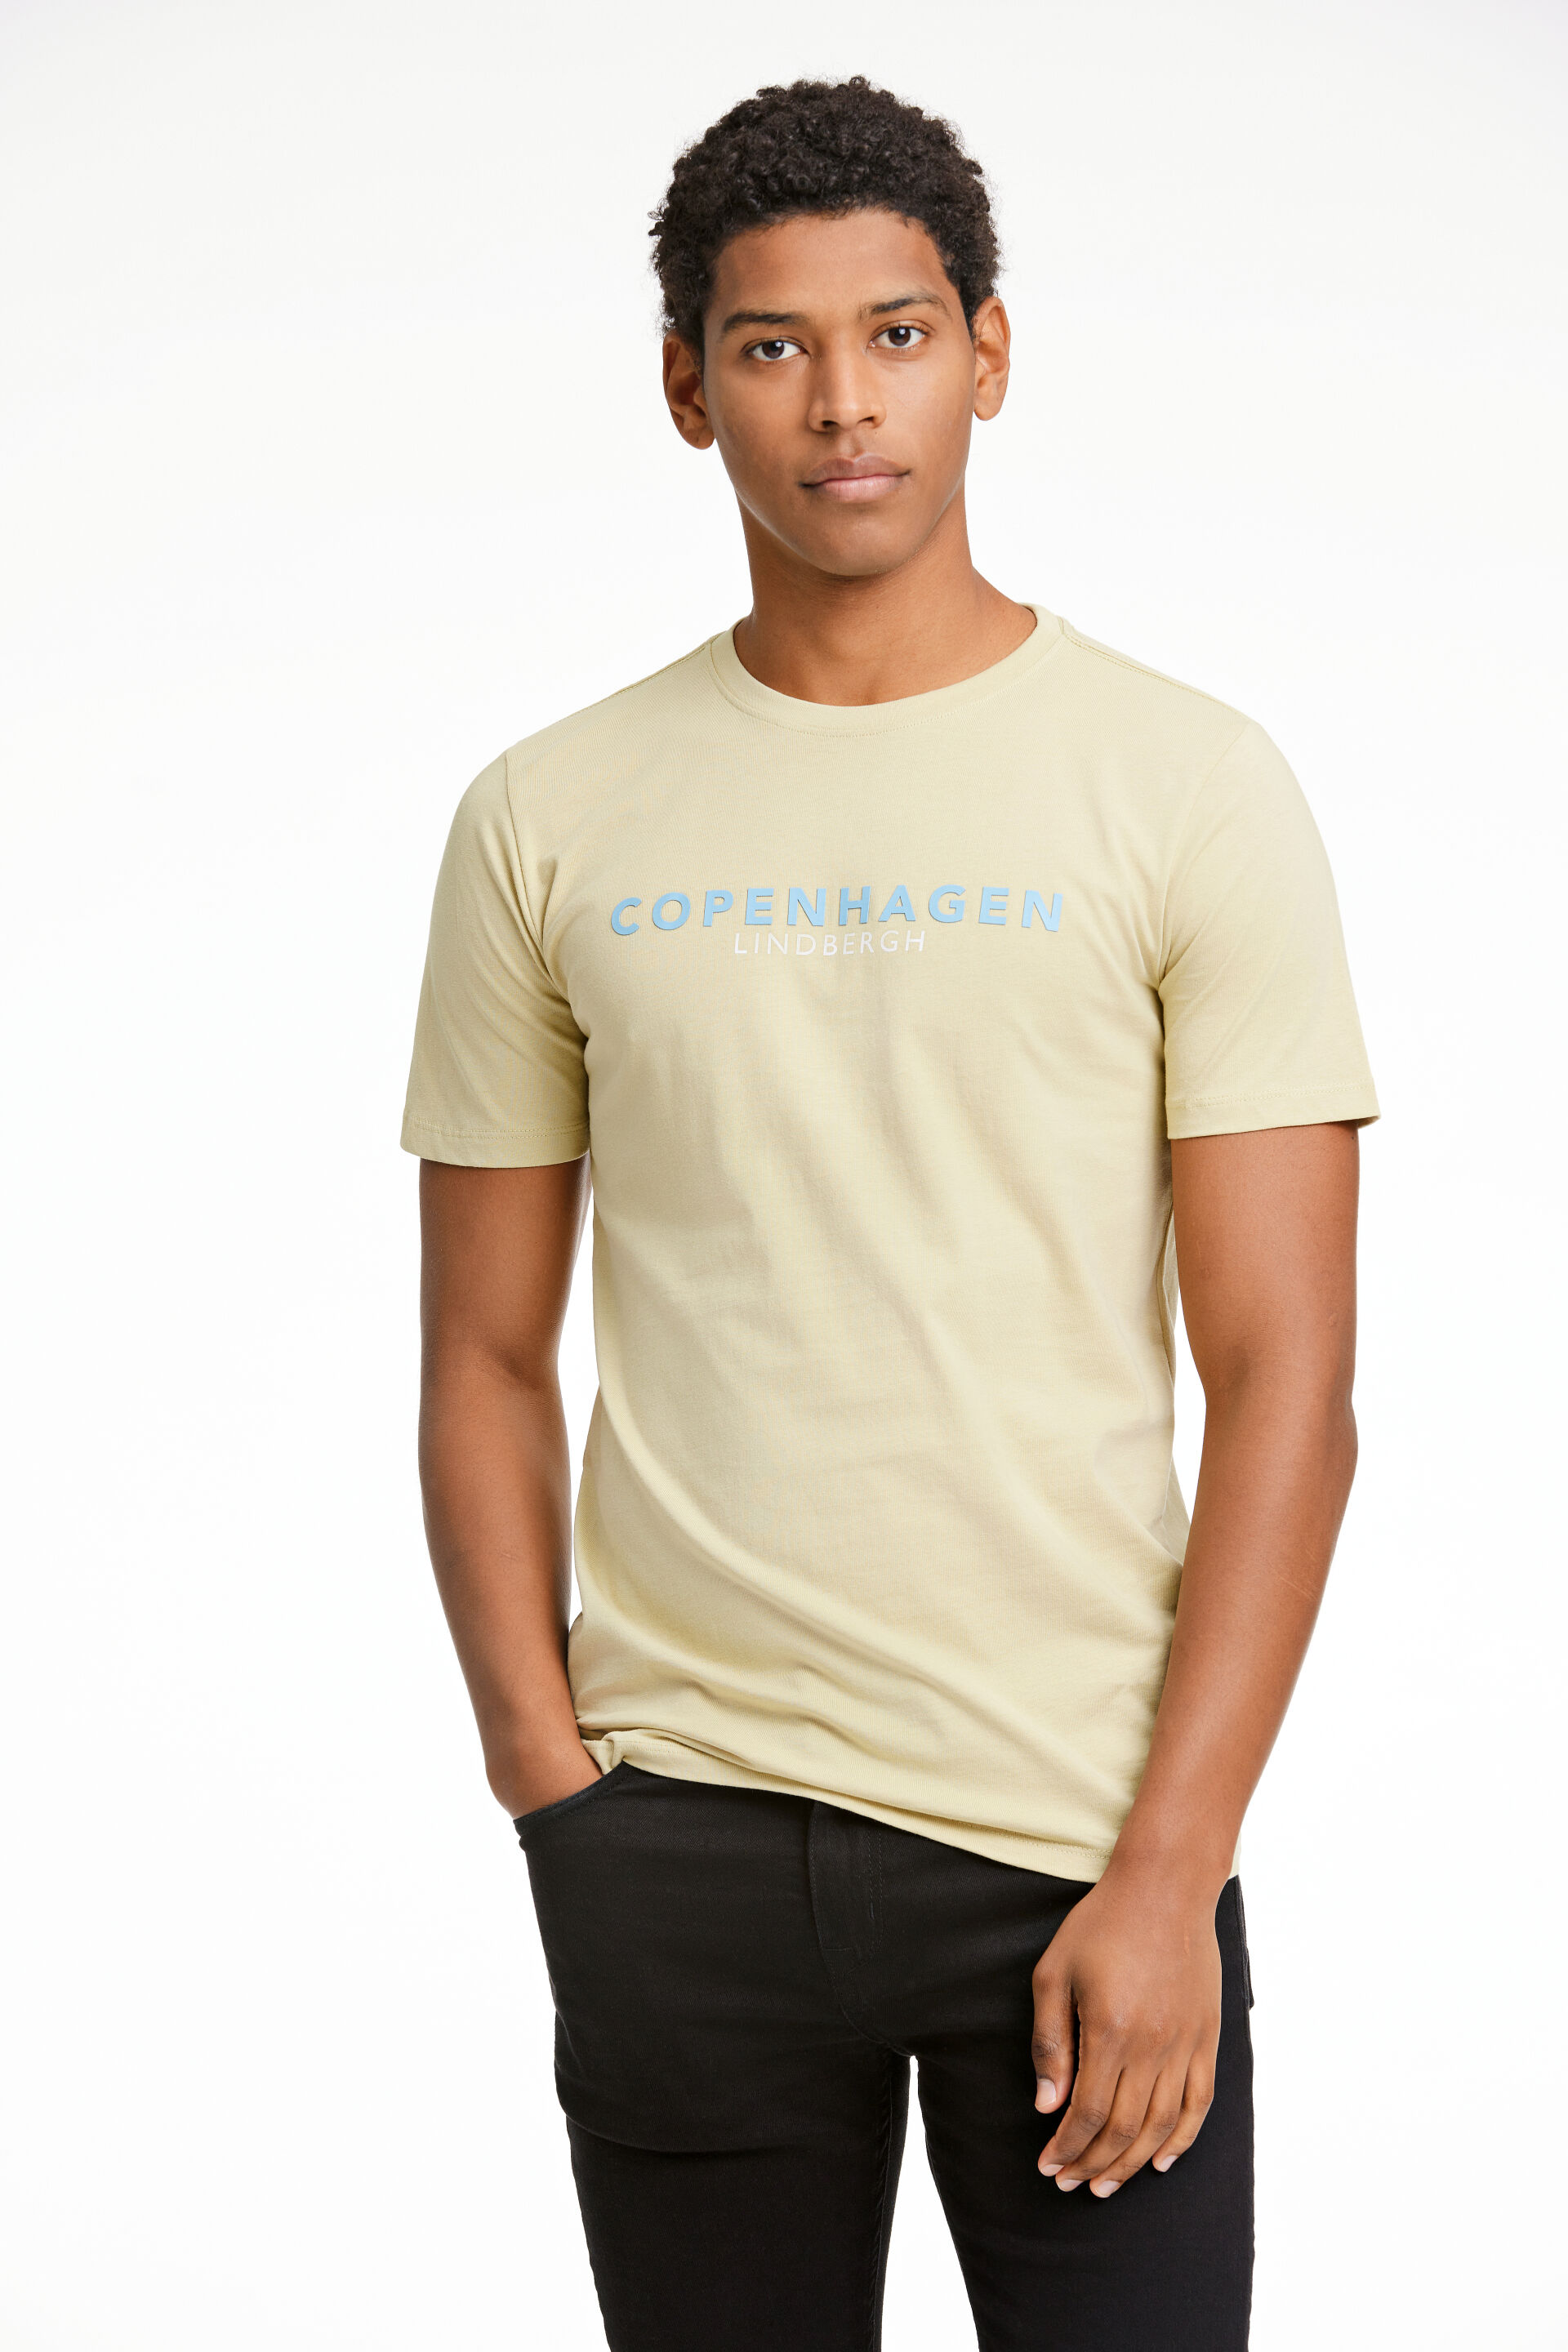 Lindbergh  T-shirt 30-400200